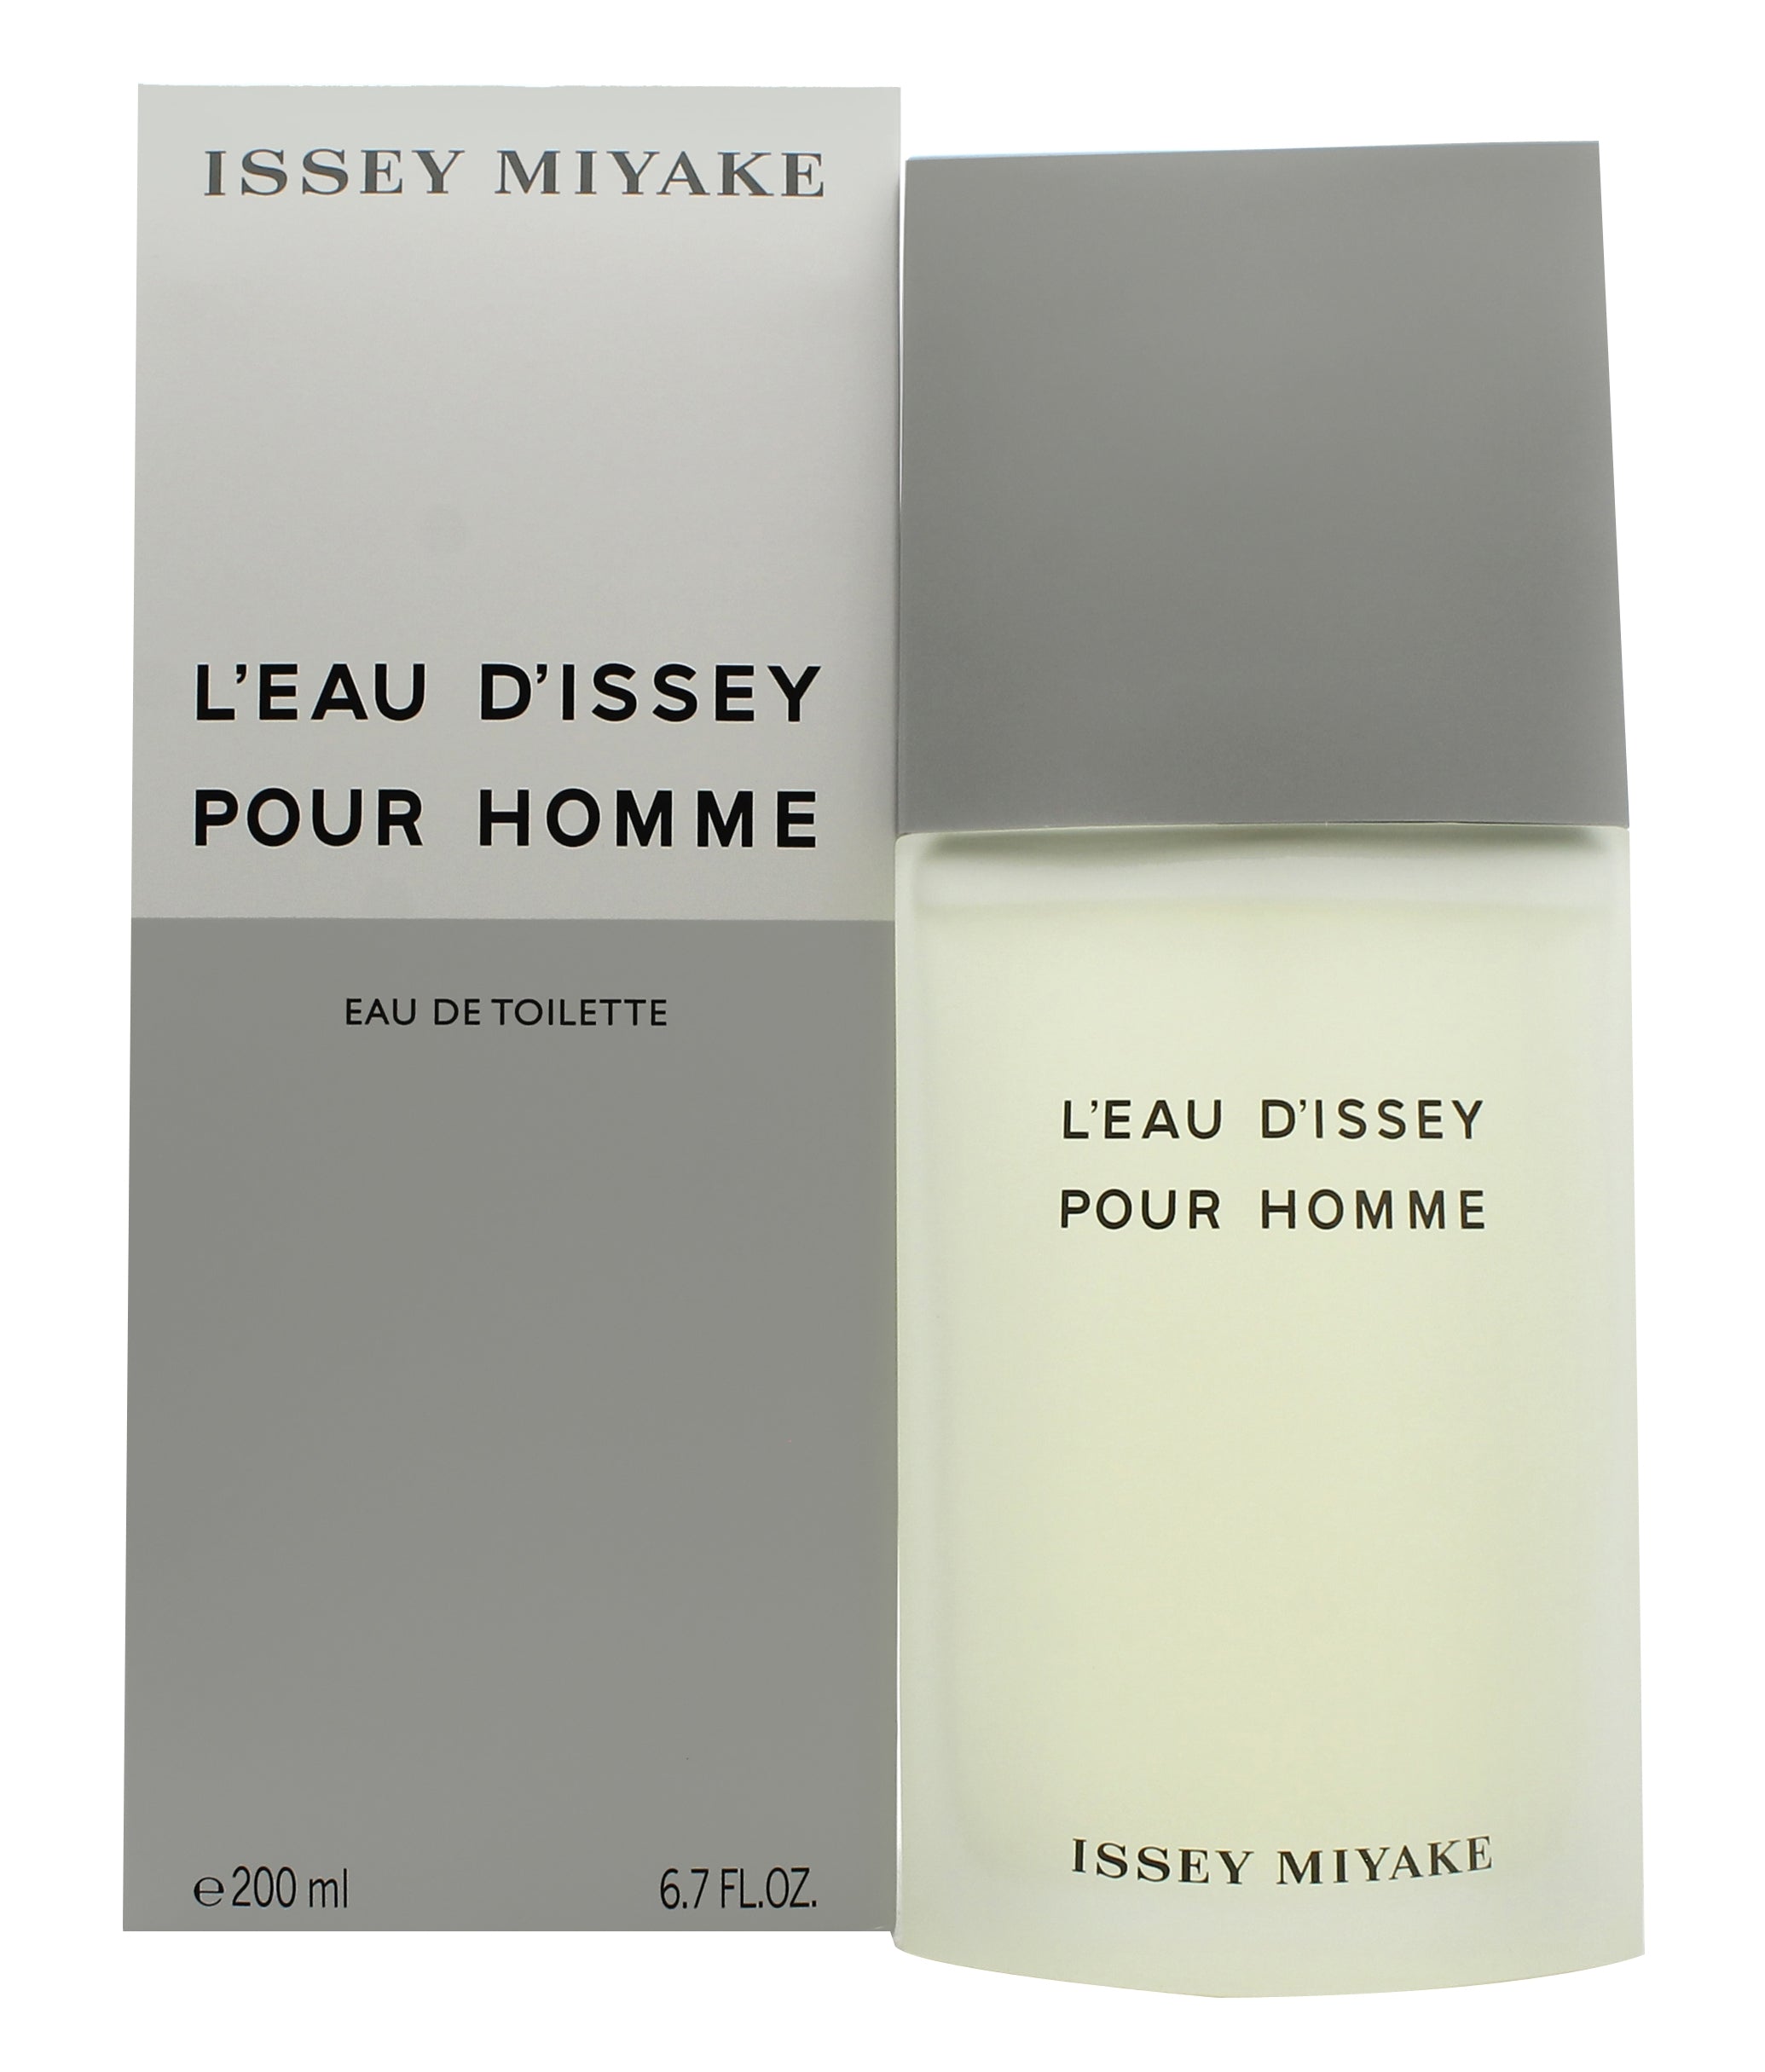 View Issey Miyake LEau dIssey Pour Homme Eau de Toilette 200ml Spray information